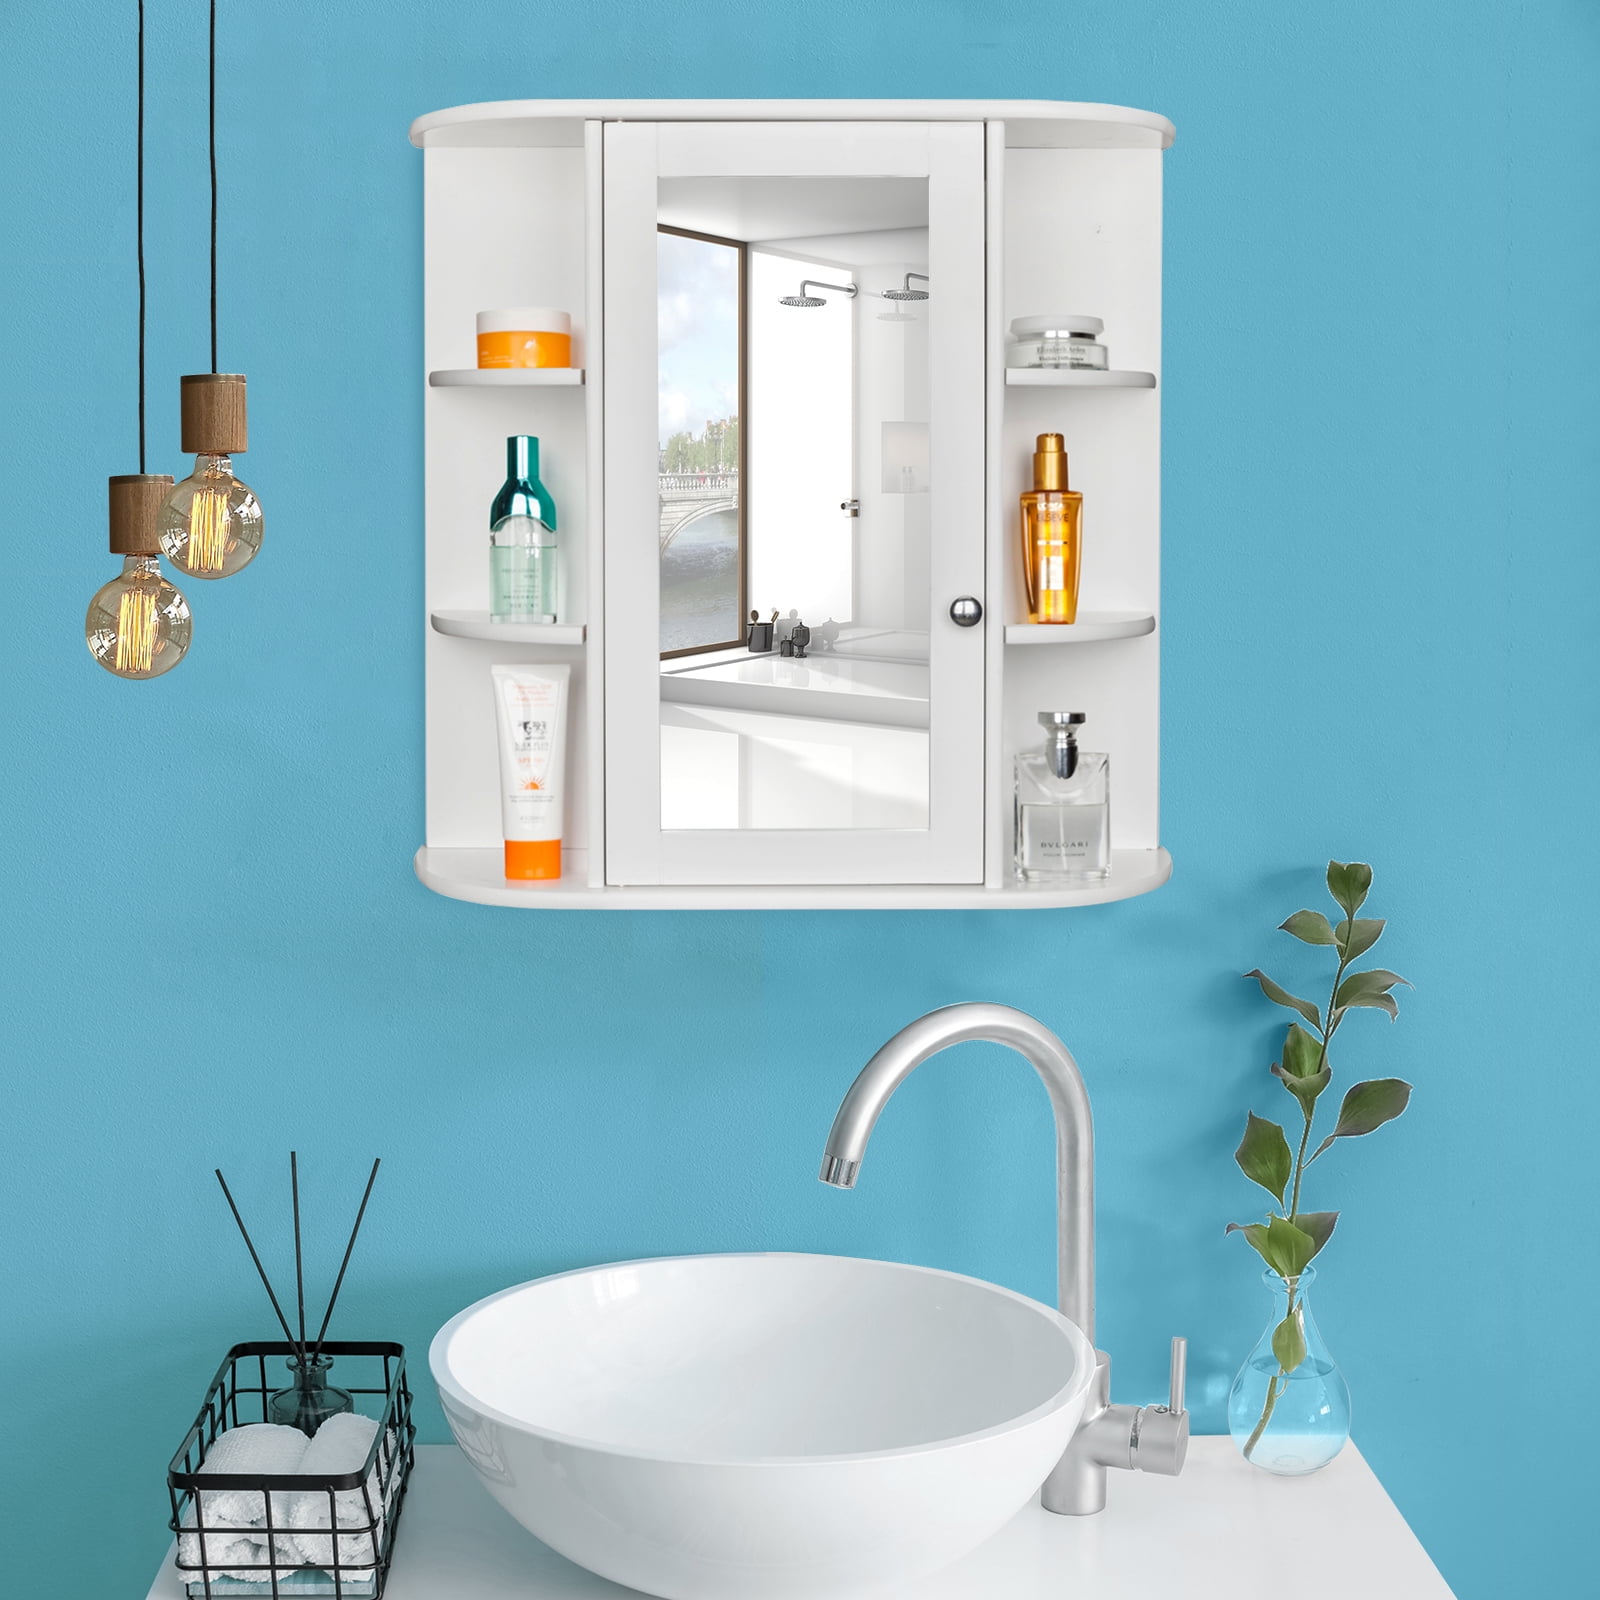 Ktaxon Medicine Cabinet Wall Mounted Bathroom Storage Cabinet Organizer  with Mirror Door and Adjustable Shelf, White Finish